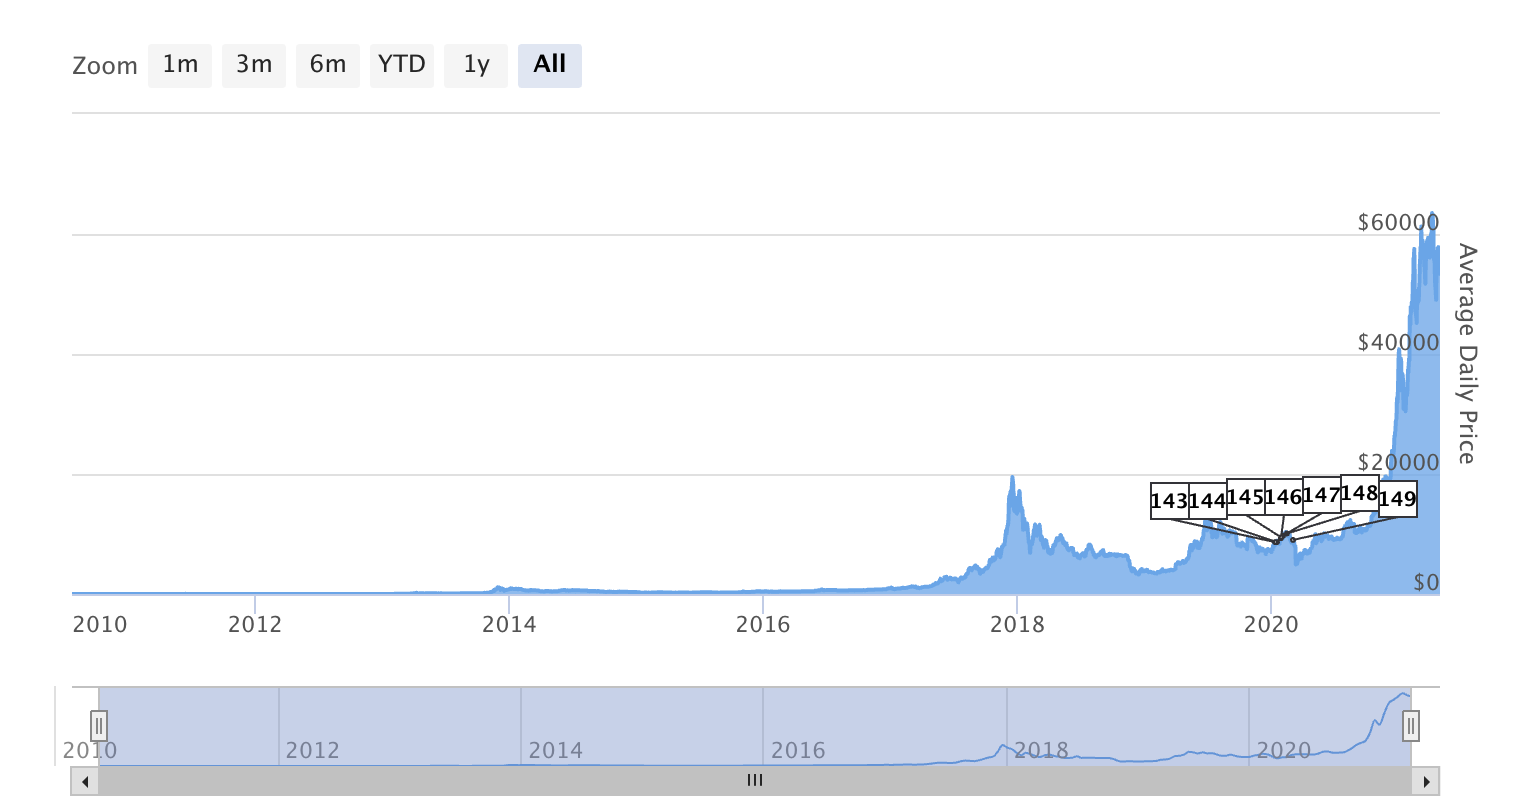 Bitcoin appreciation over its lifespan, mid-July 2010-April 2021